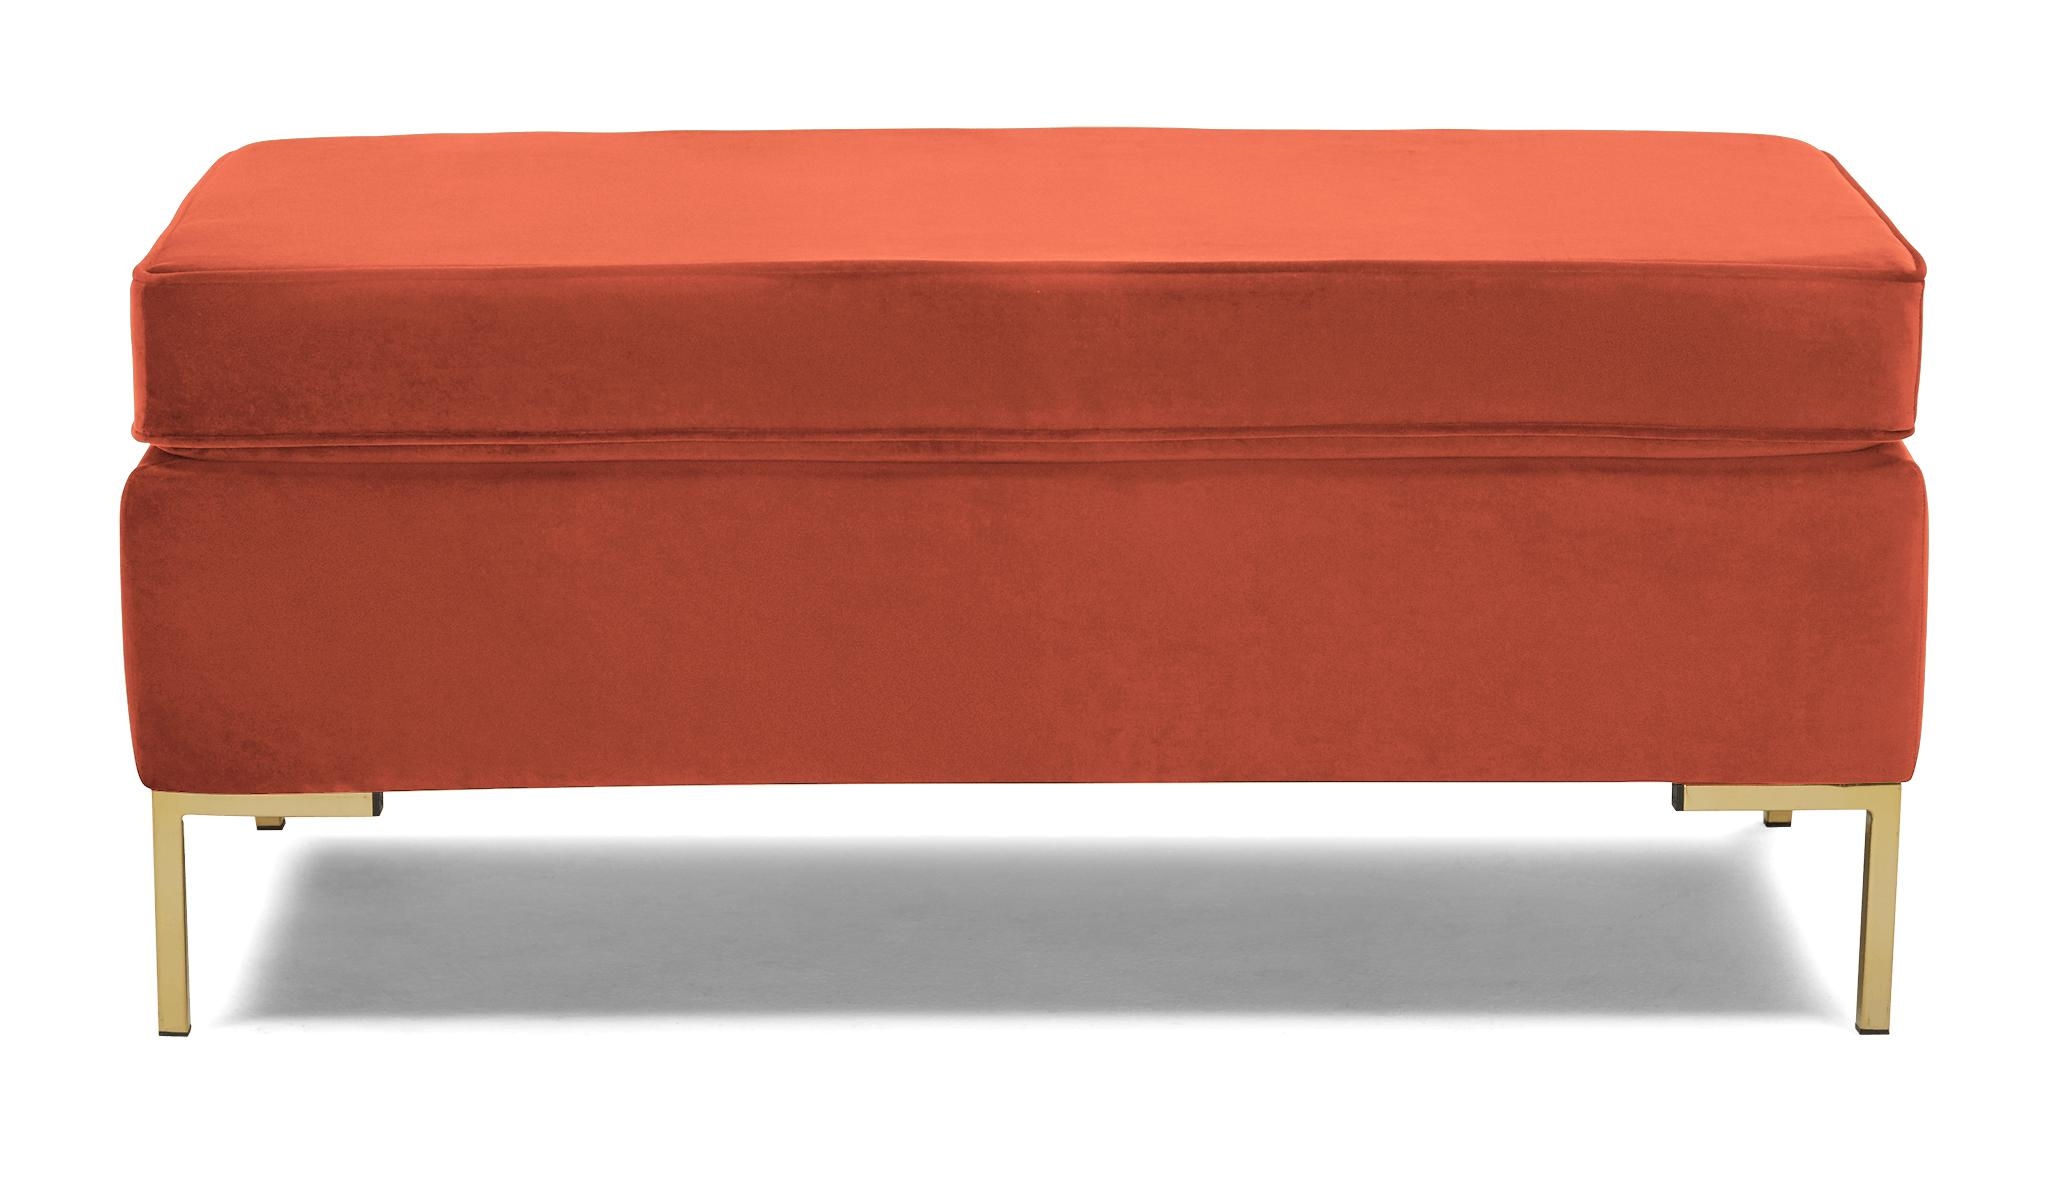 Orange Dee Mid Century Modern Bench with Storage - Key Largo Coral - Image 0